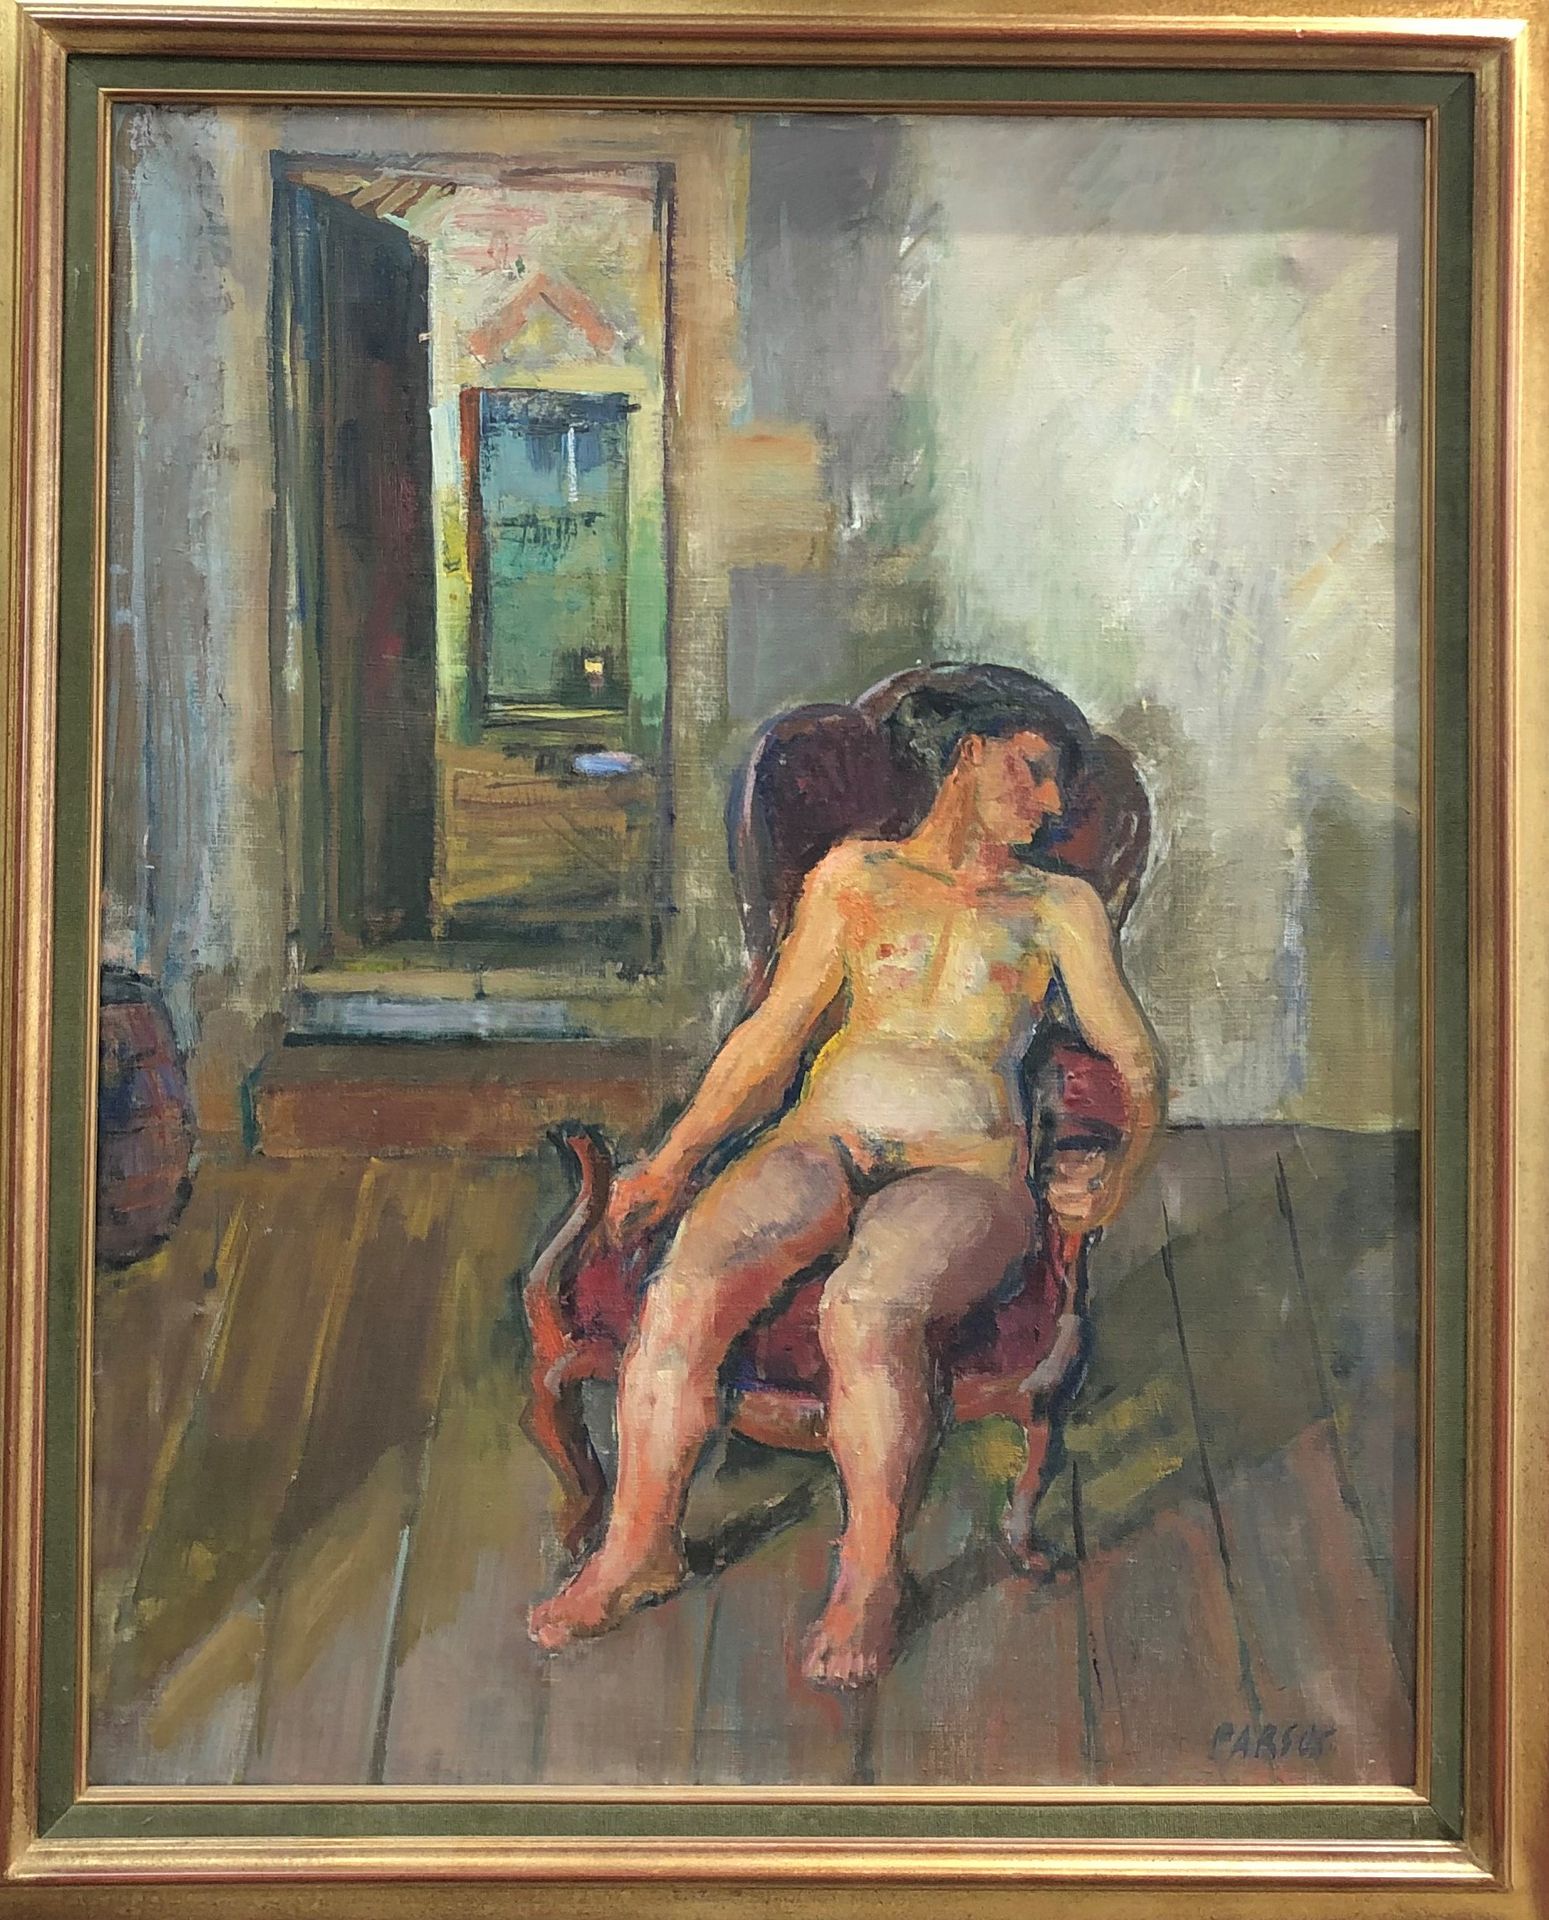 Null 皮埃尔-帕苏斯（生于1921年）。

坐在扶手椅上的裸体

布面油画。

右下方有签名。

92 x 65 cm